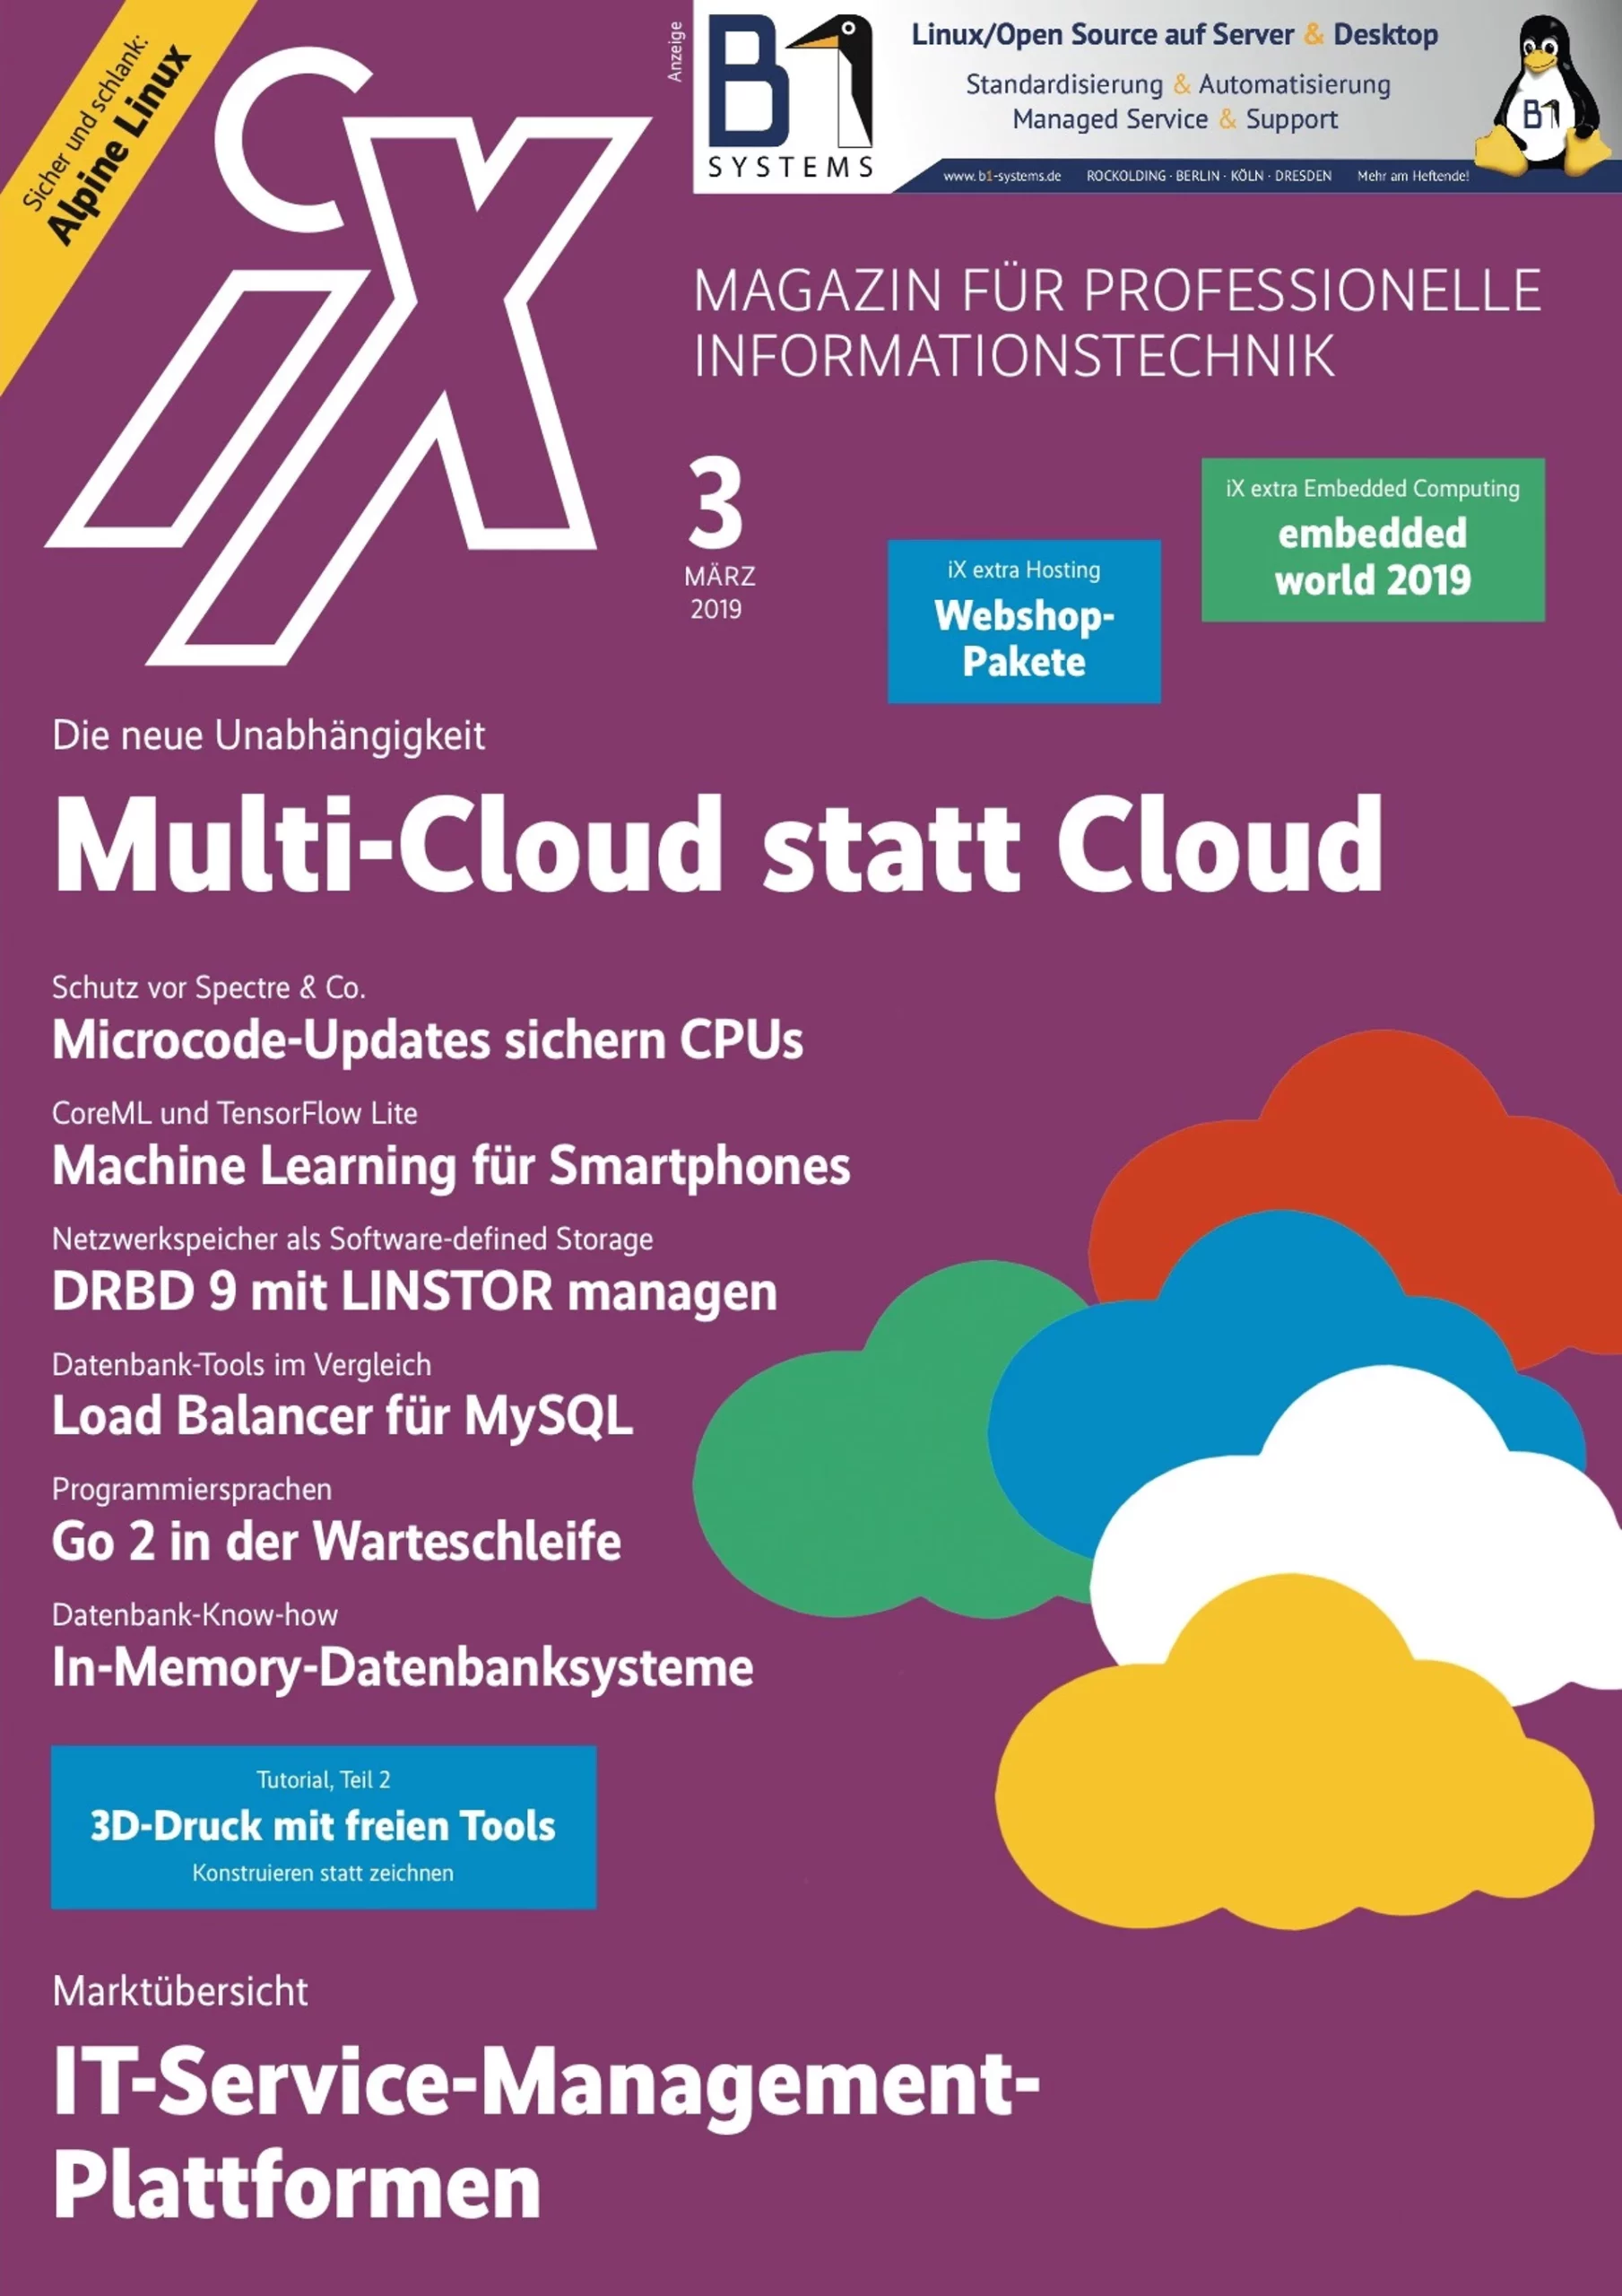 Zentral gesteuert – Multi-Cloud Management mit Morpheus